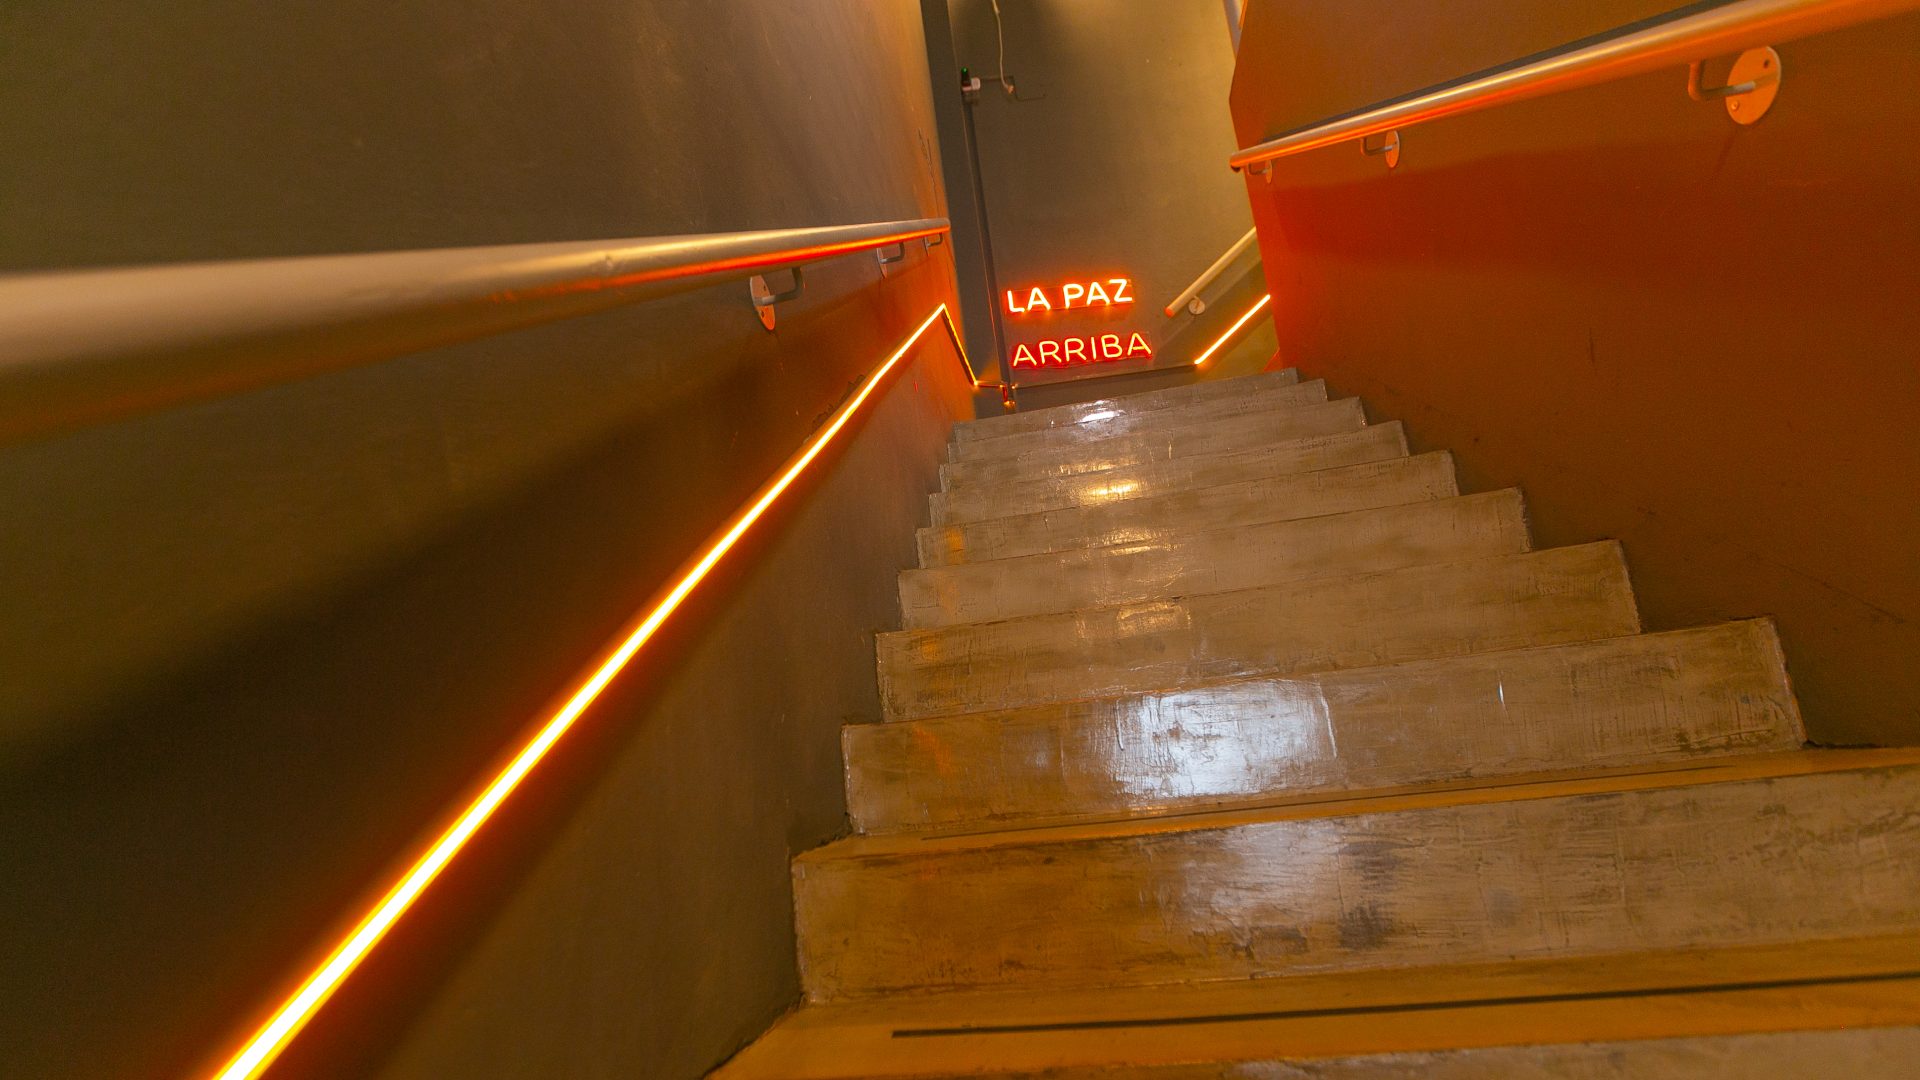 Imagen de la escalera de la cooperativa.